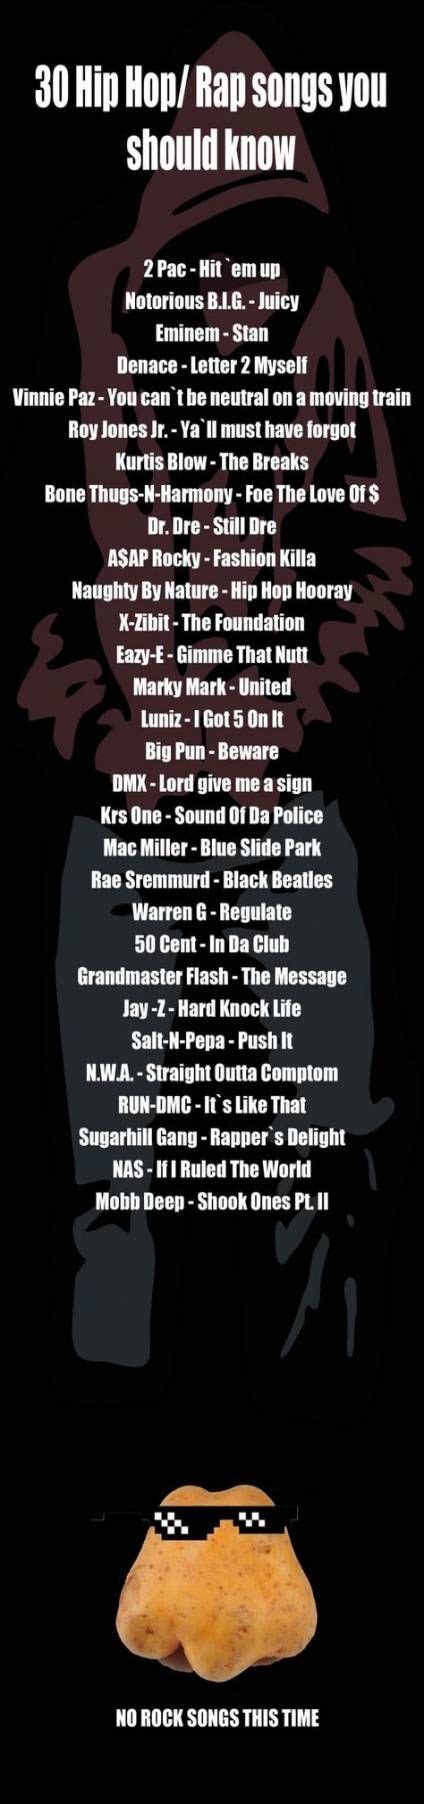 Quotes Music Lyrics Rap 33 Ideas For 2019 Music Playlist Hip Hop